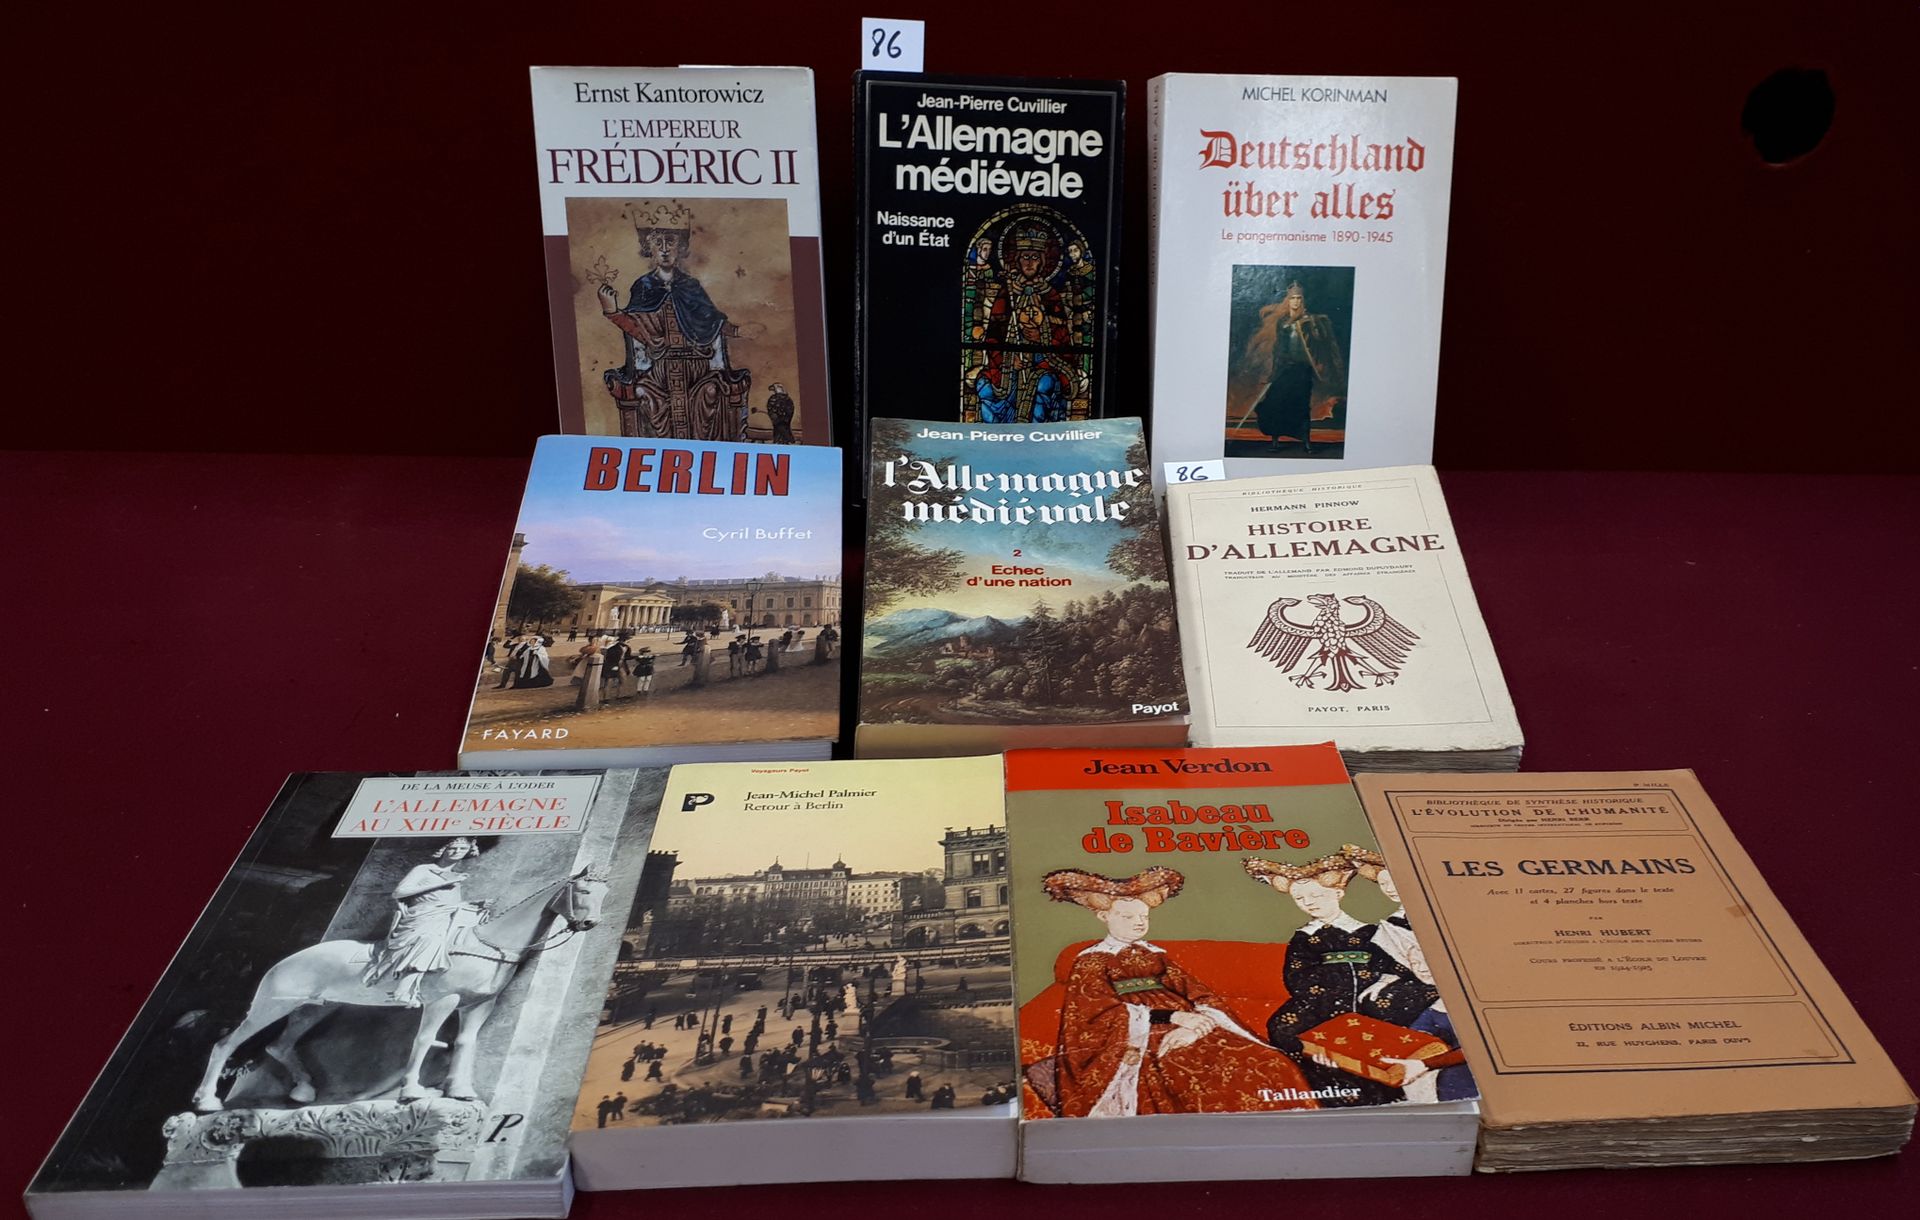 Allemagne set of 10 books on Germany including: Medieval Germany